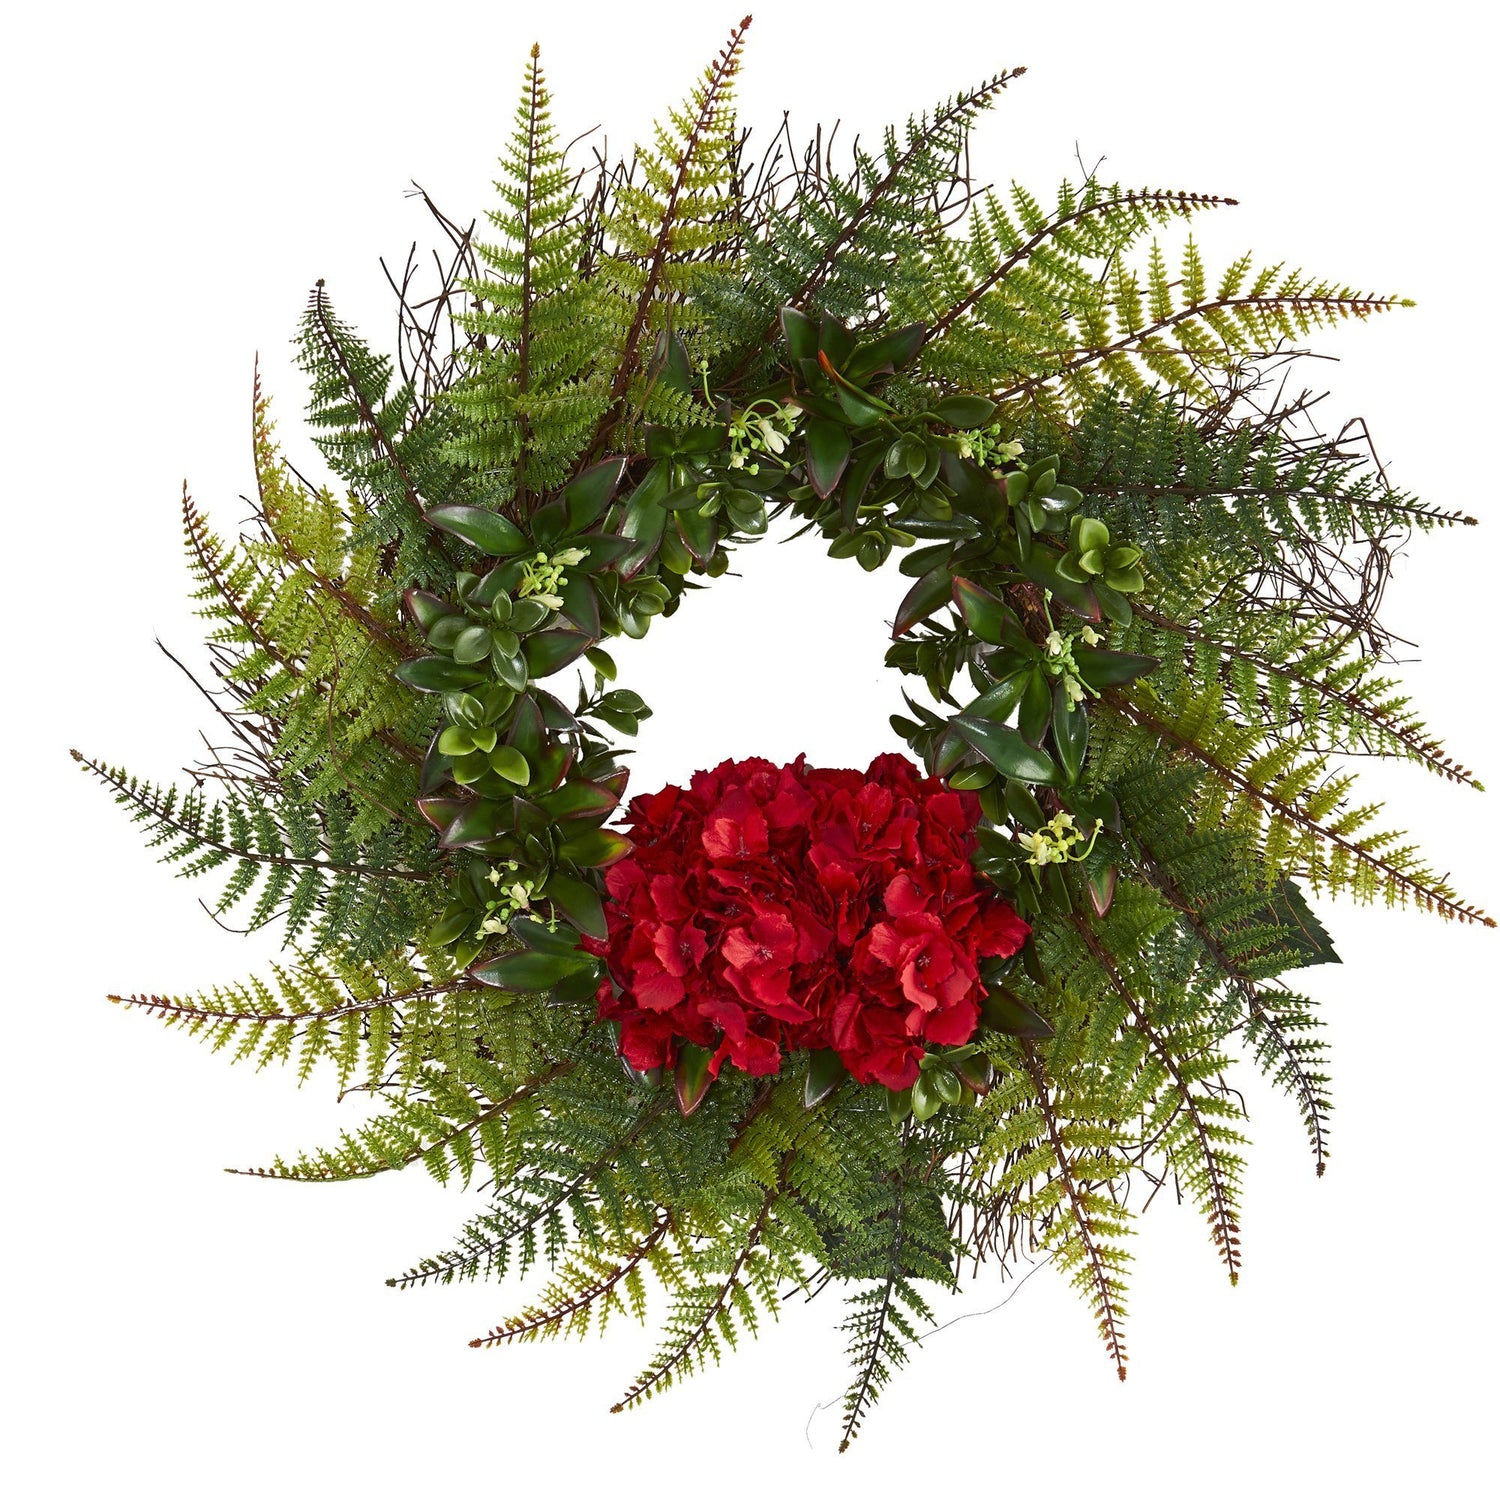 23” Assorted Fern and Hydrangea Artificial Wreath